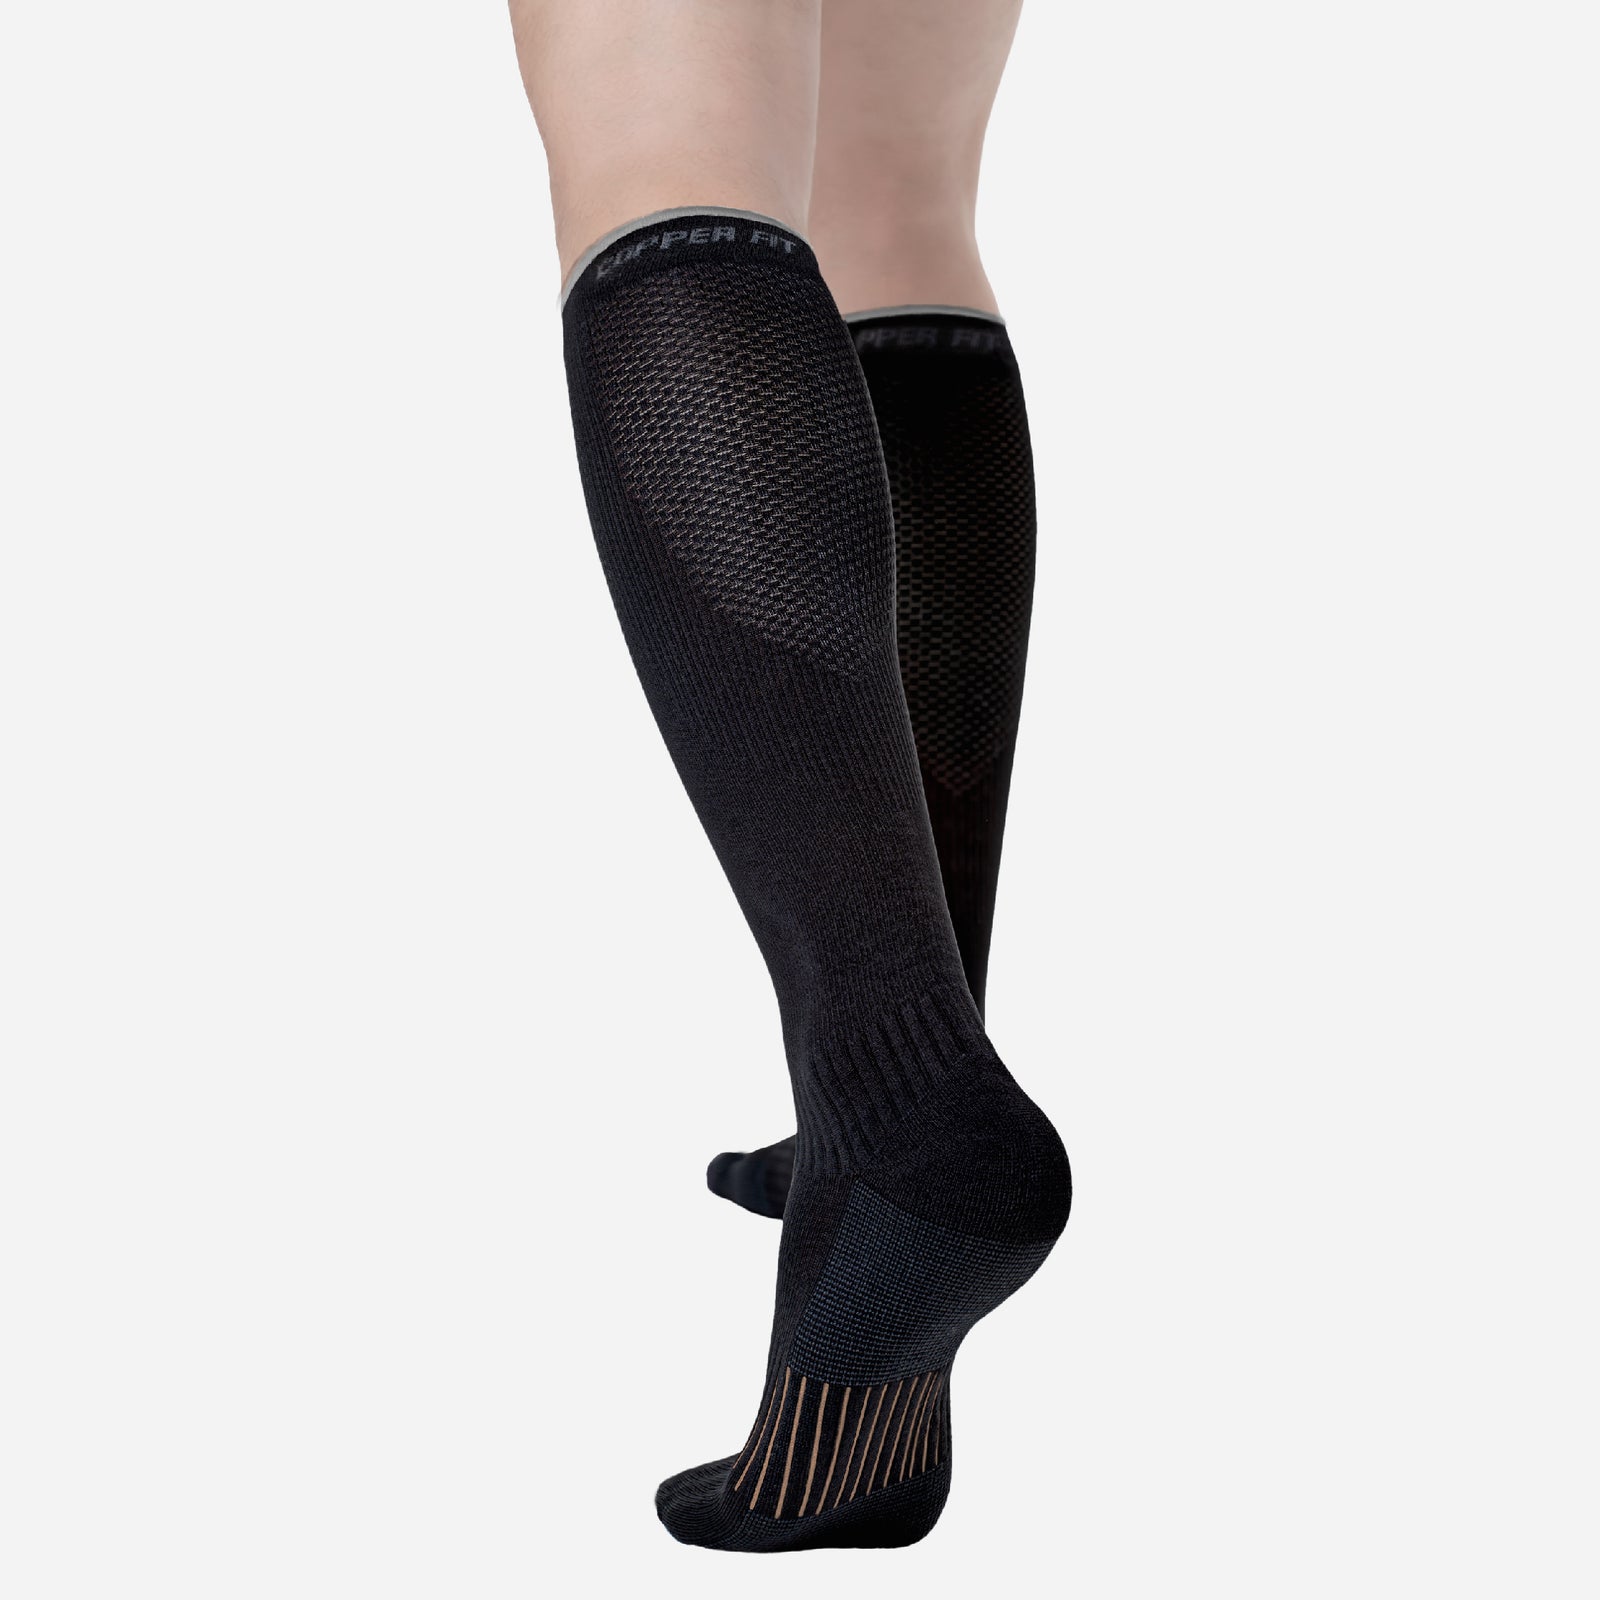 COPPER Calf Compression Sleeve Running Leg Support Brace Sport Shin Splint  Socks